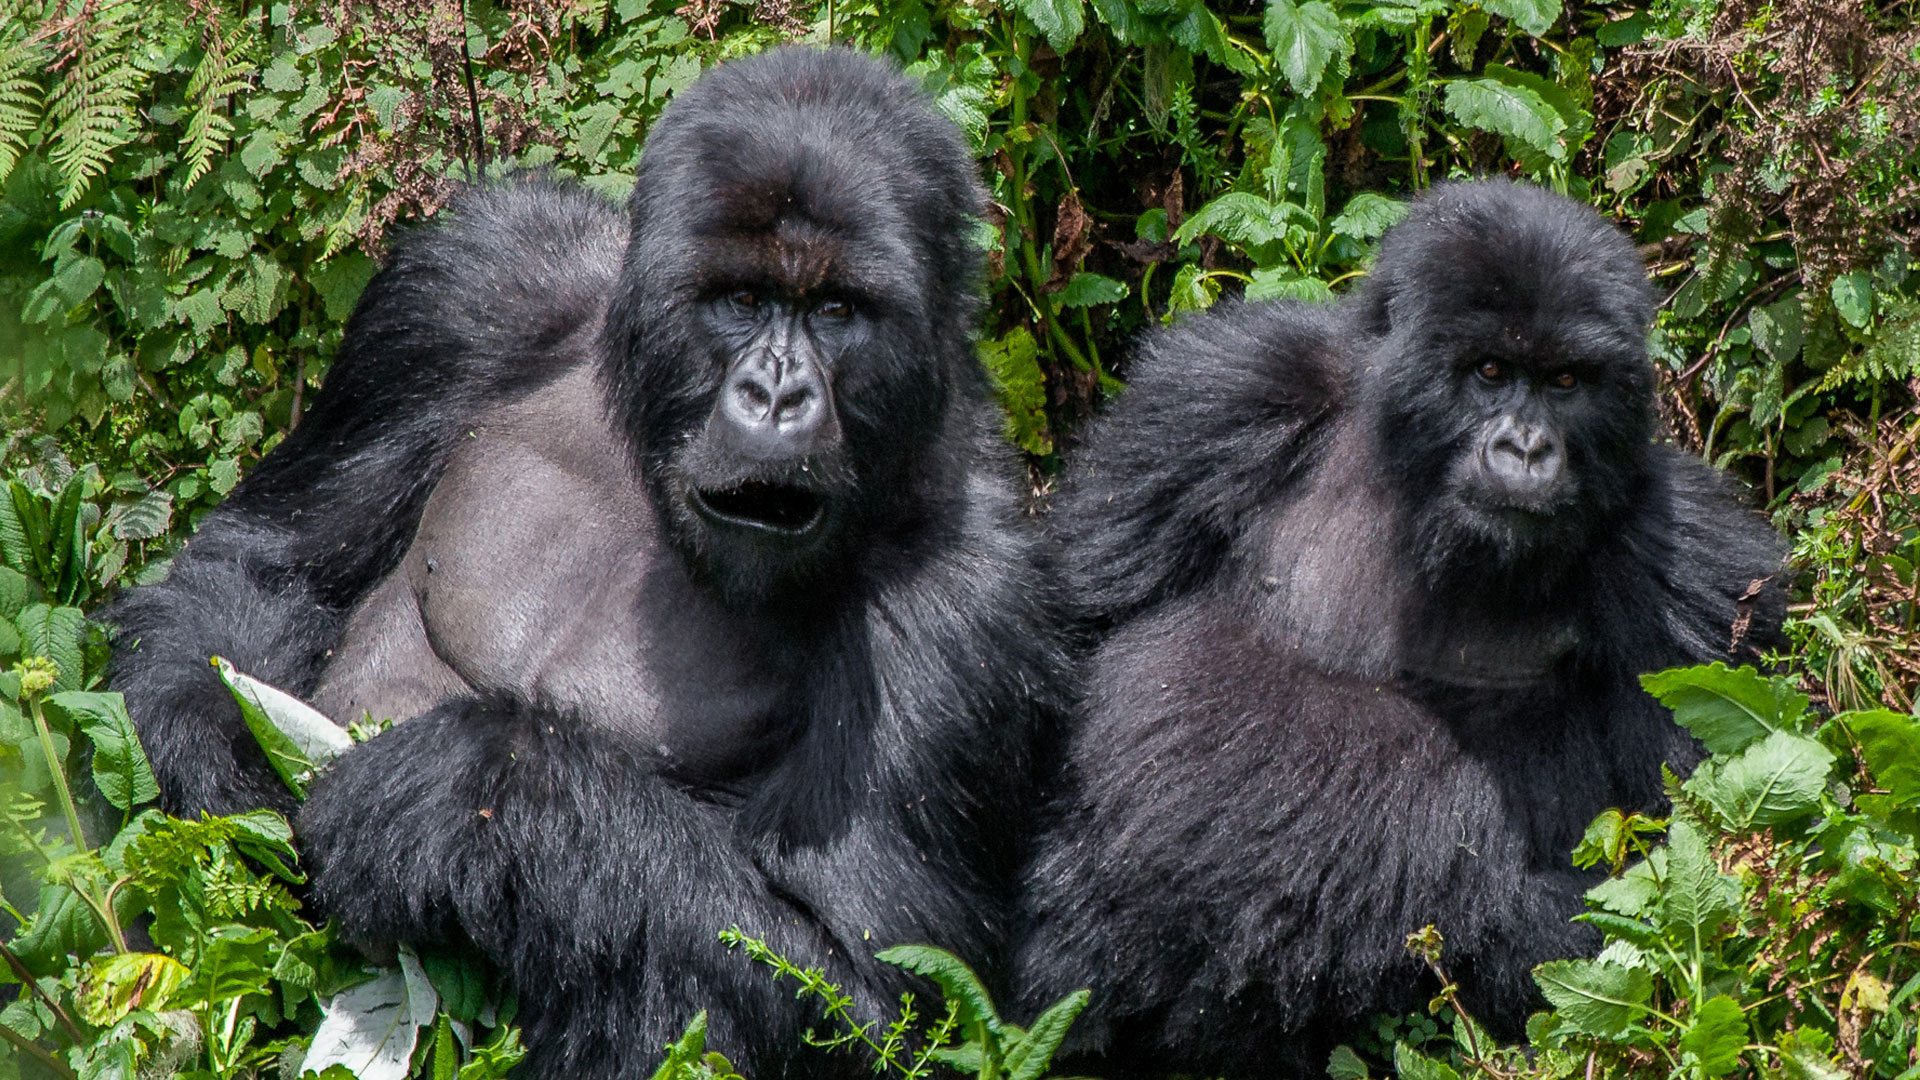 Booking Gorilla Trekking Permits